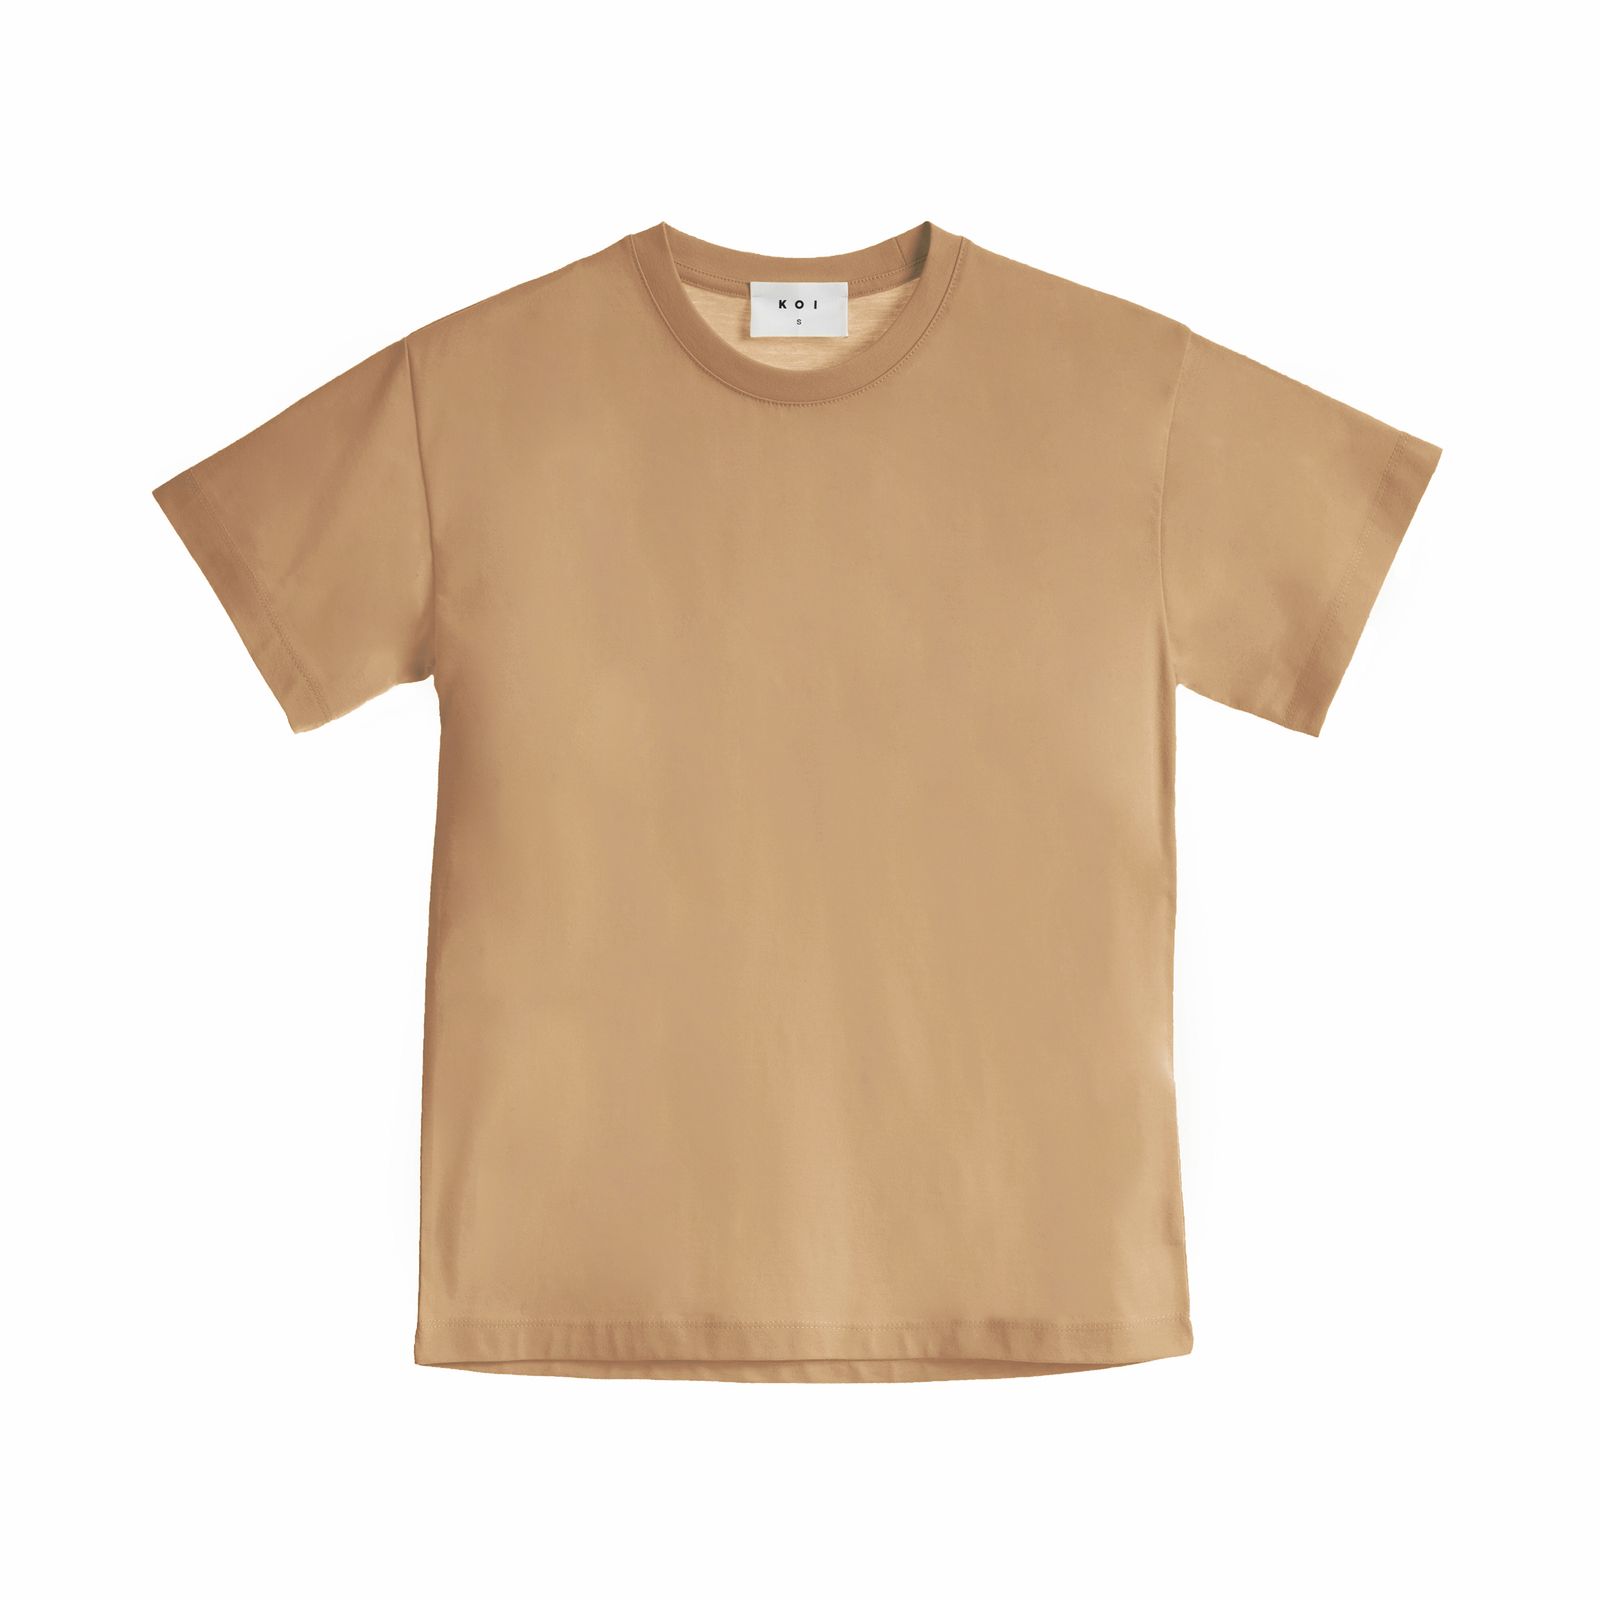 تی شرت آستین کوتاه زنانه کوی مدل رگولار هی گرل کد 444 رنگ کاراملی -  - 1